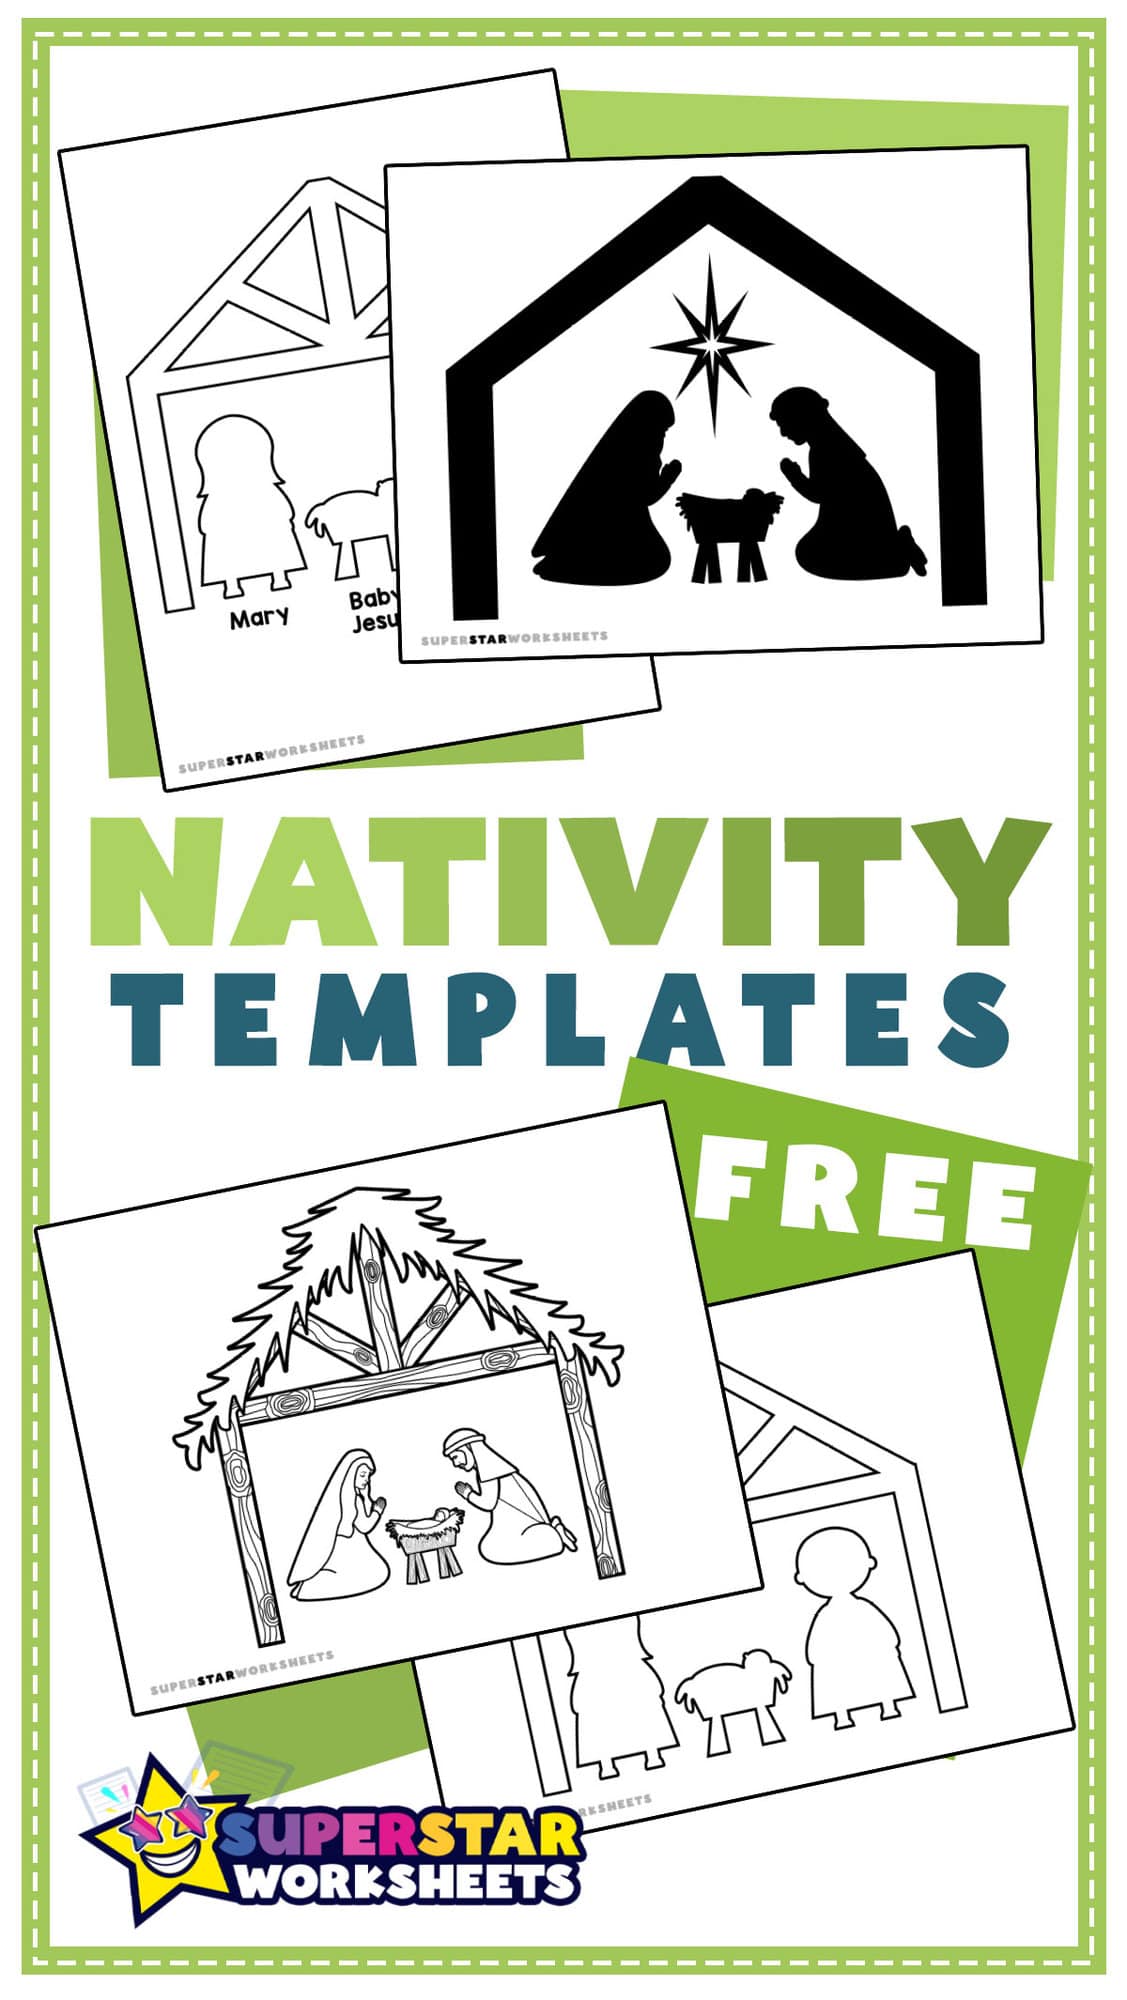 Nativity Template - Superstar Worksheets